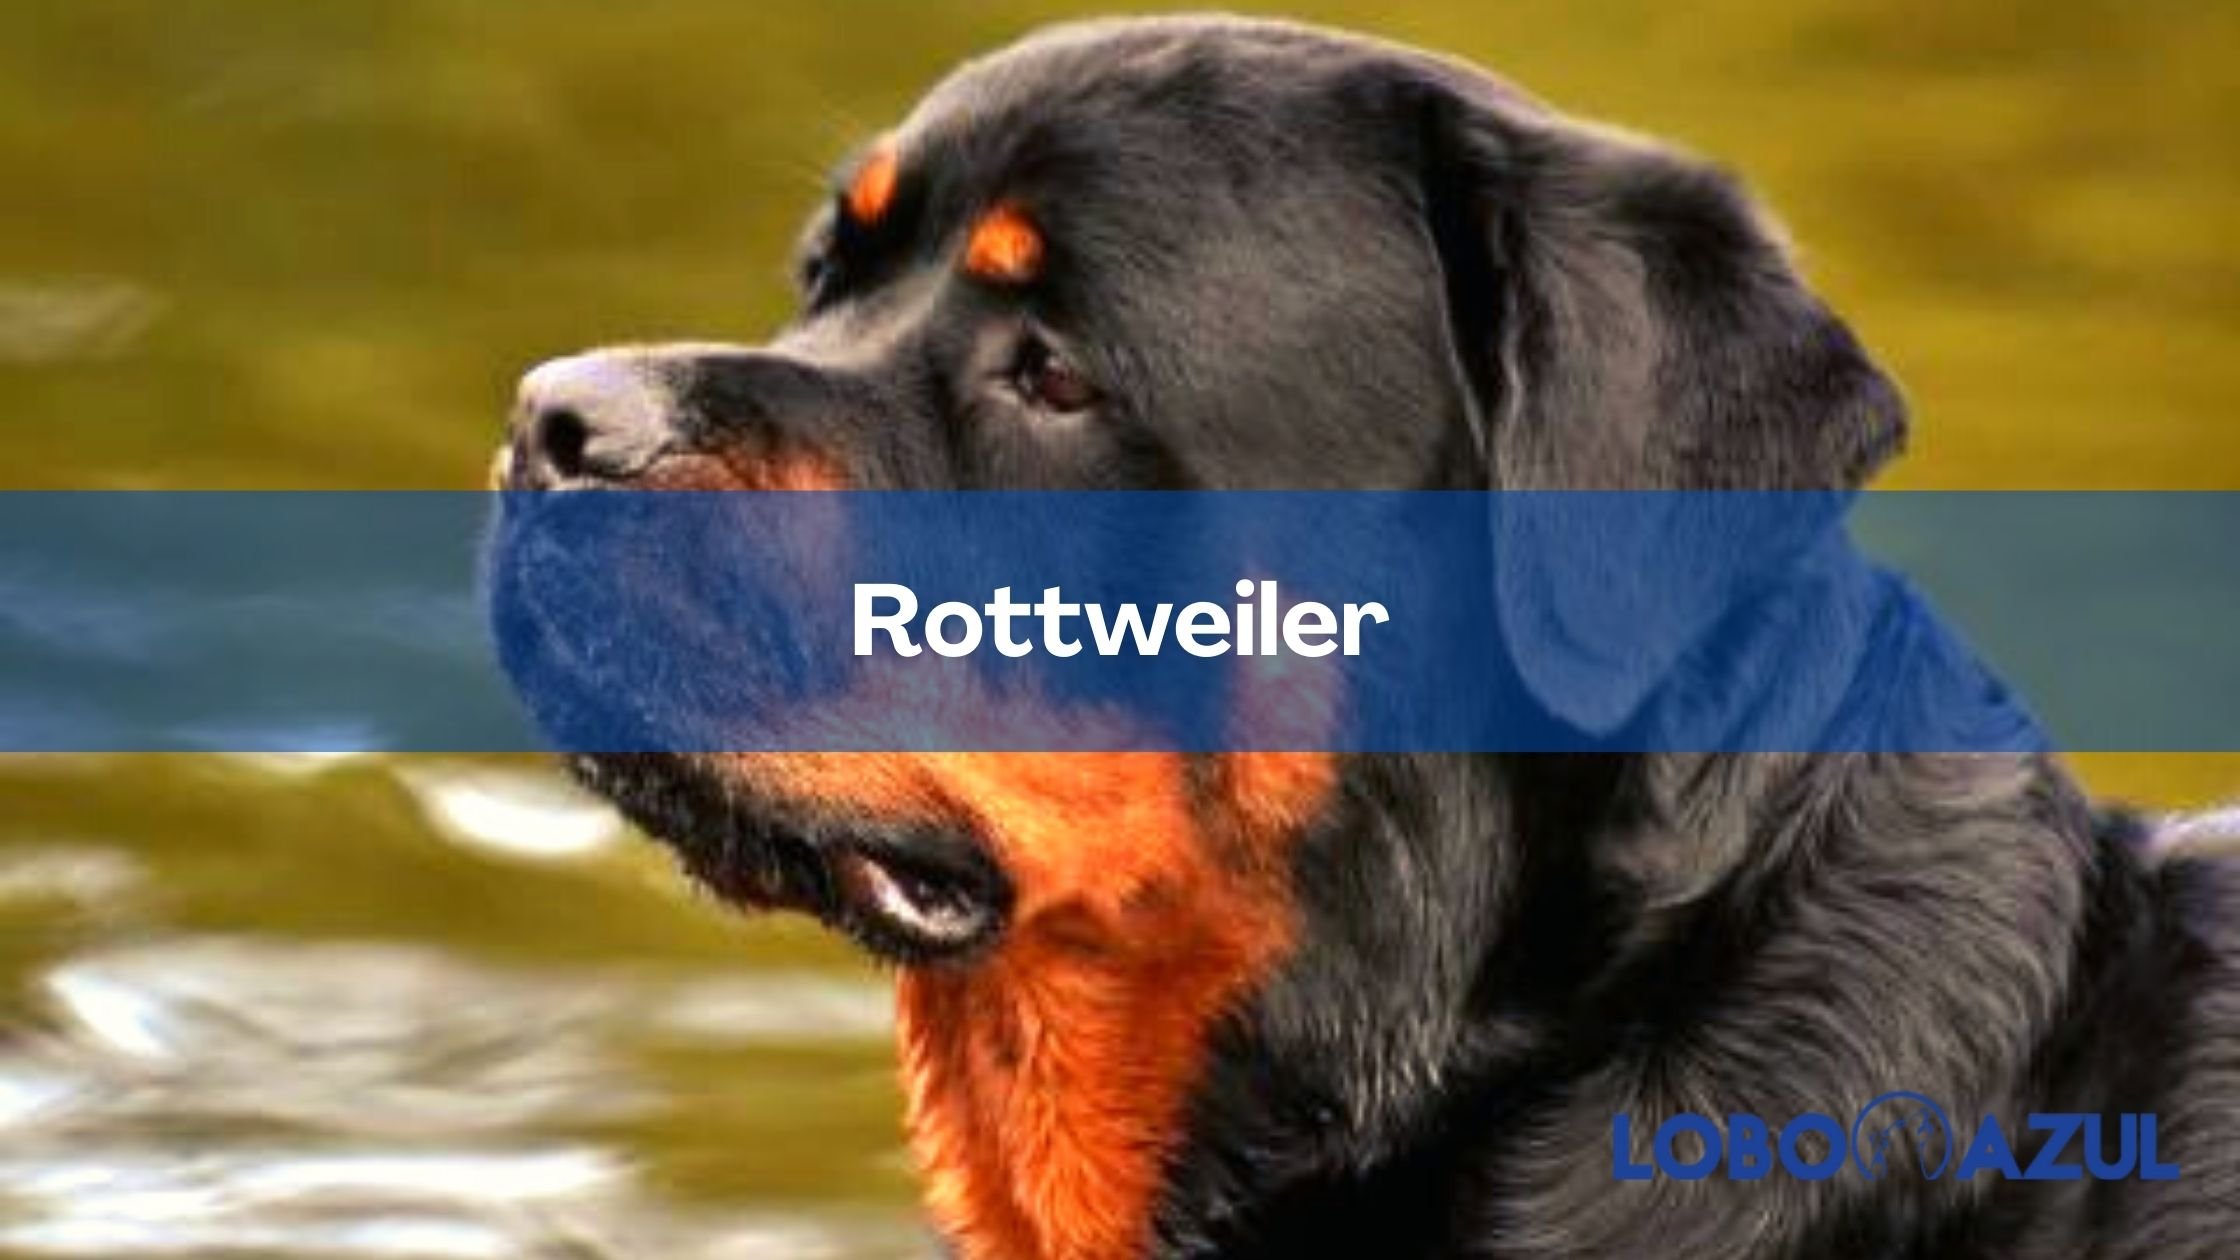 Rottweiler - Te lo contamos todo sobre esta increíble raza